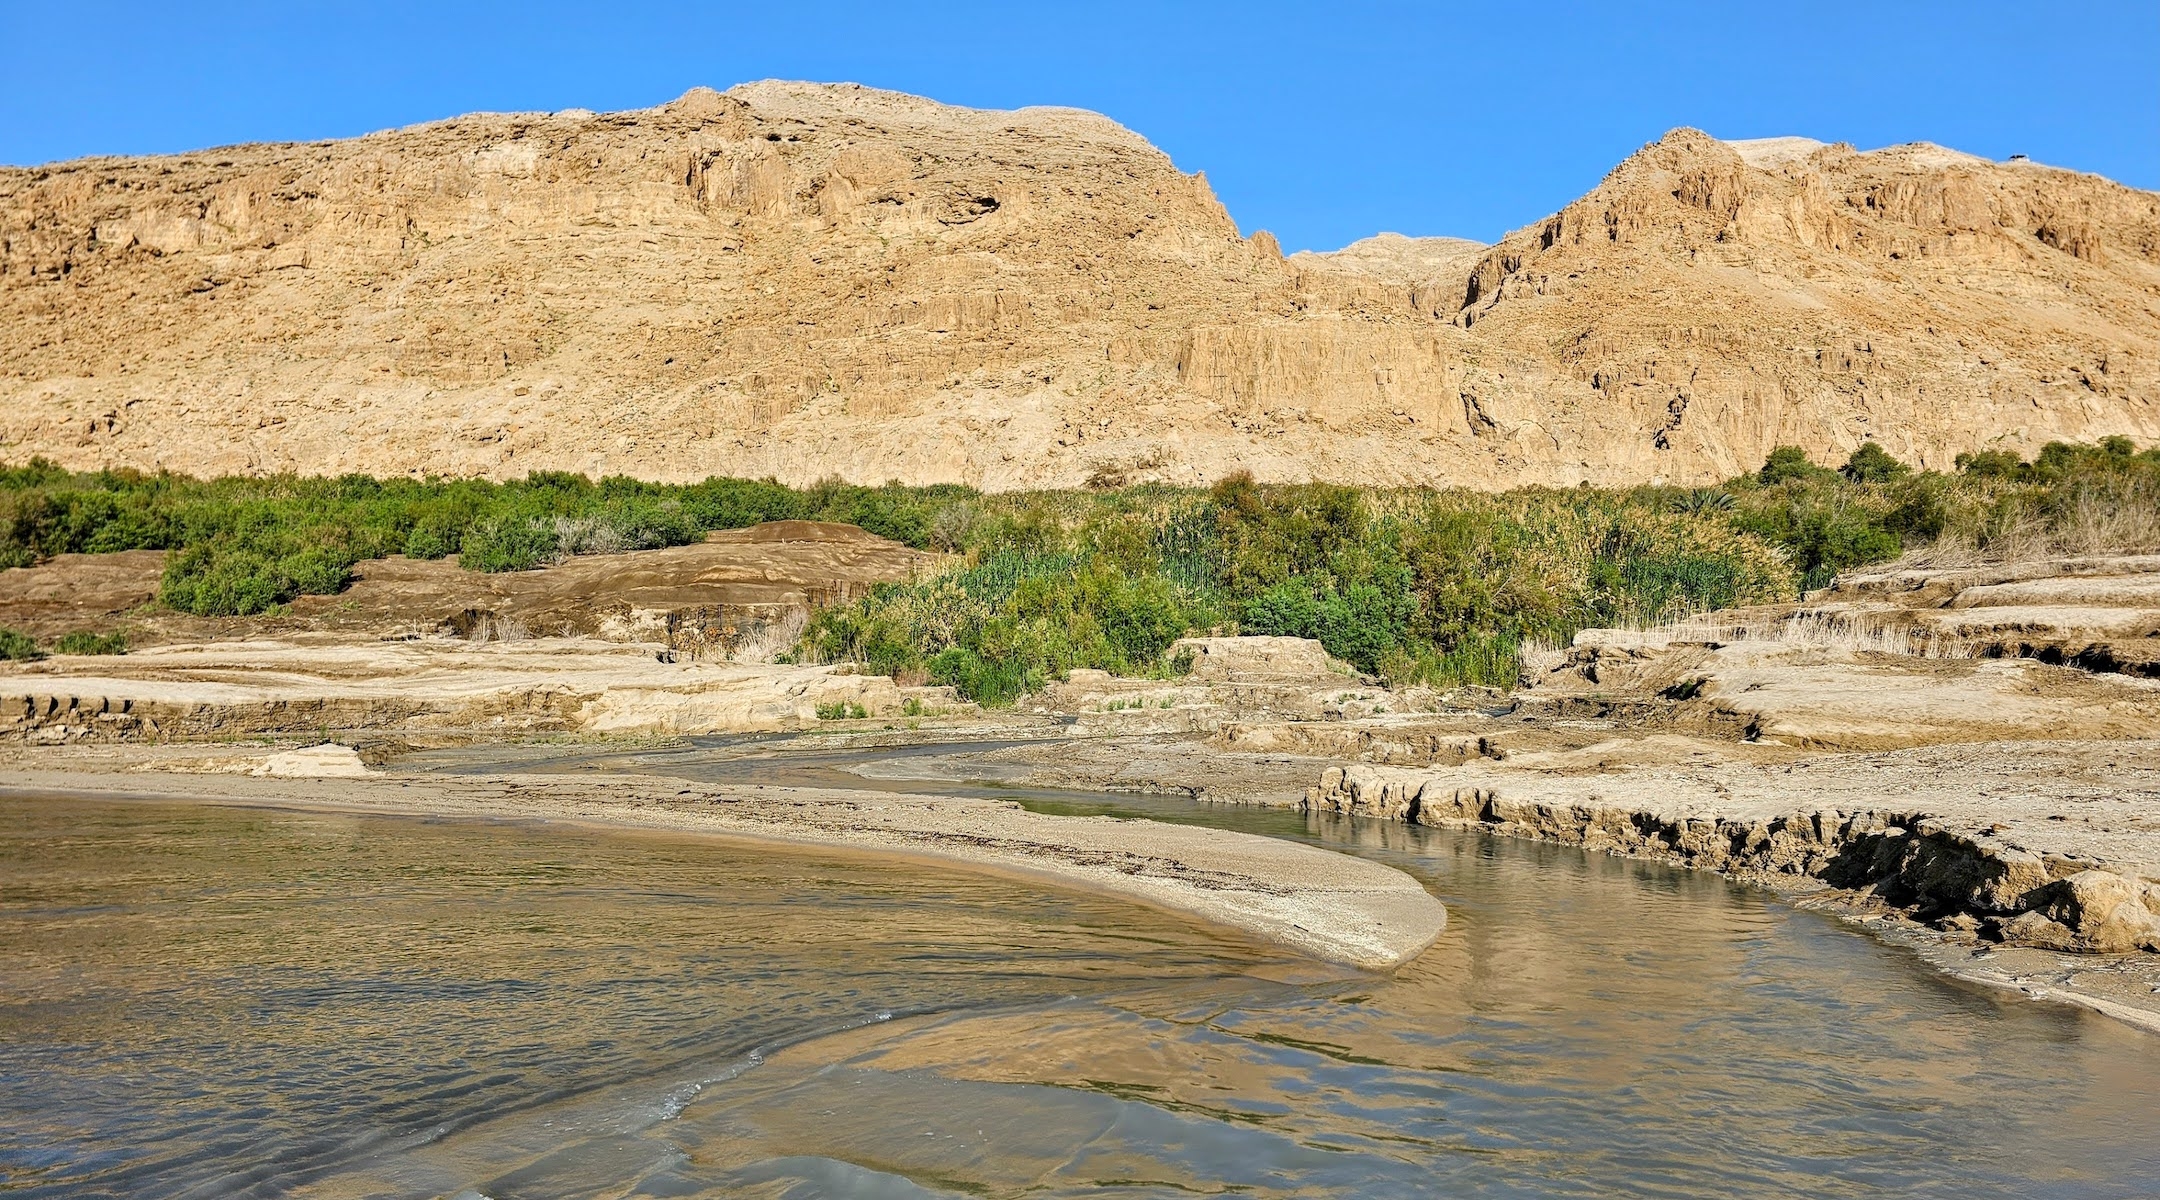 The Dead Sea has lost 40% of its volume in recent decades. (Noam Bedein)